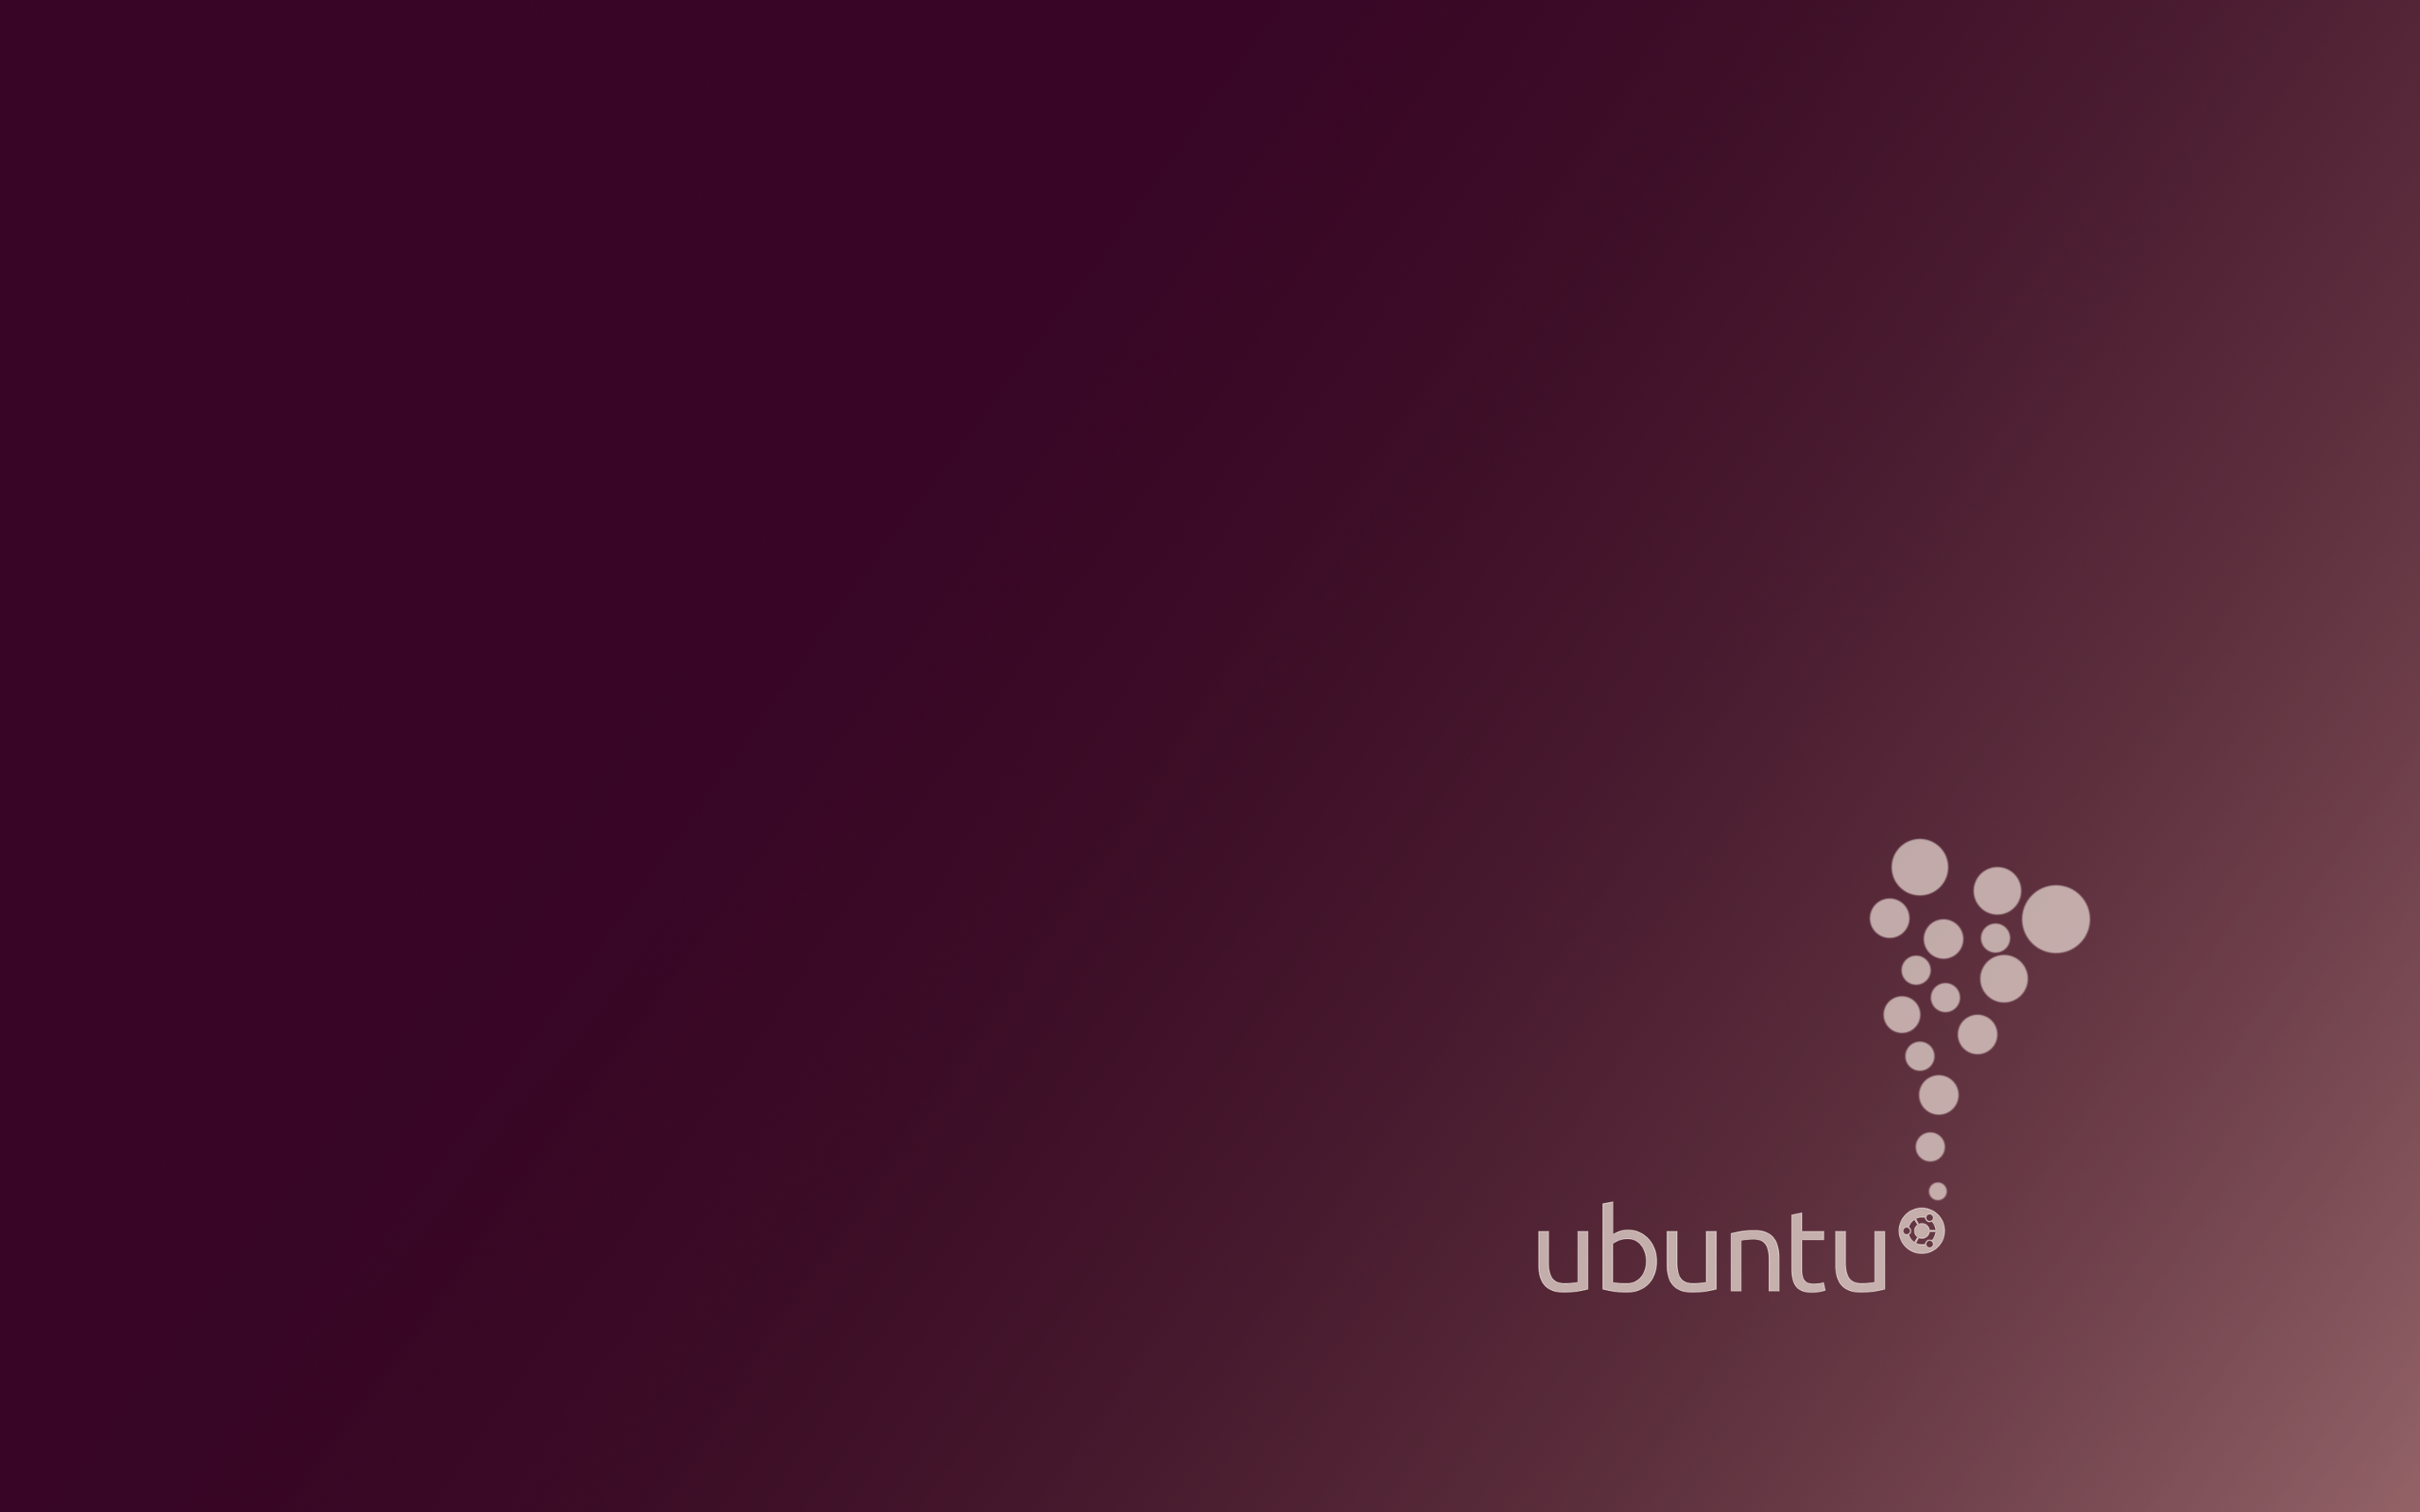 Linux Purple Ubuntu 2560x1600